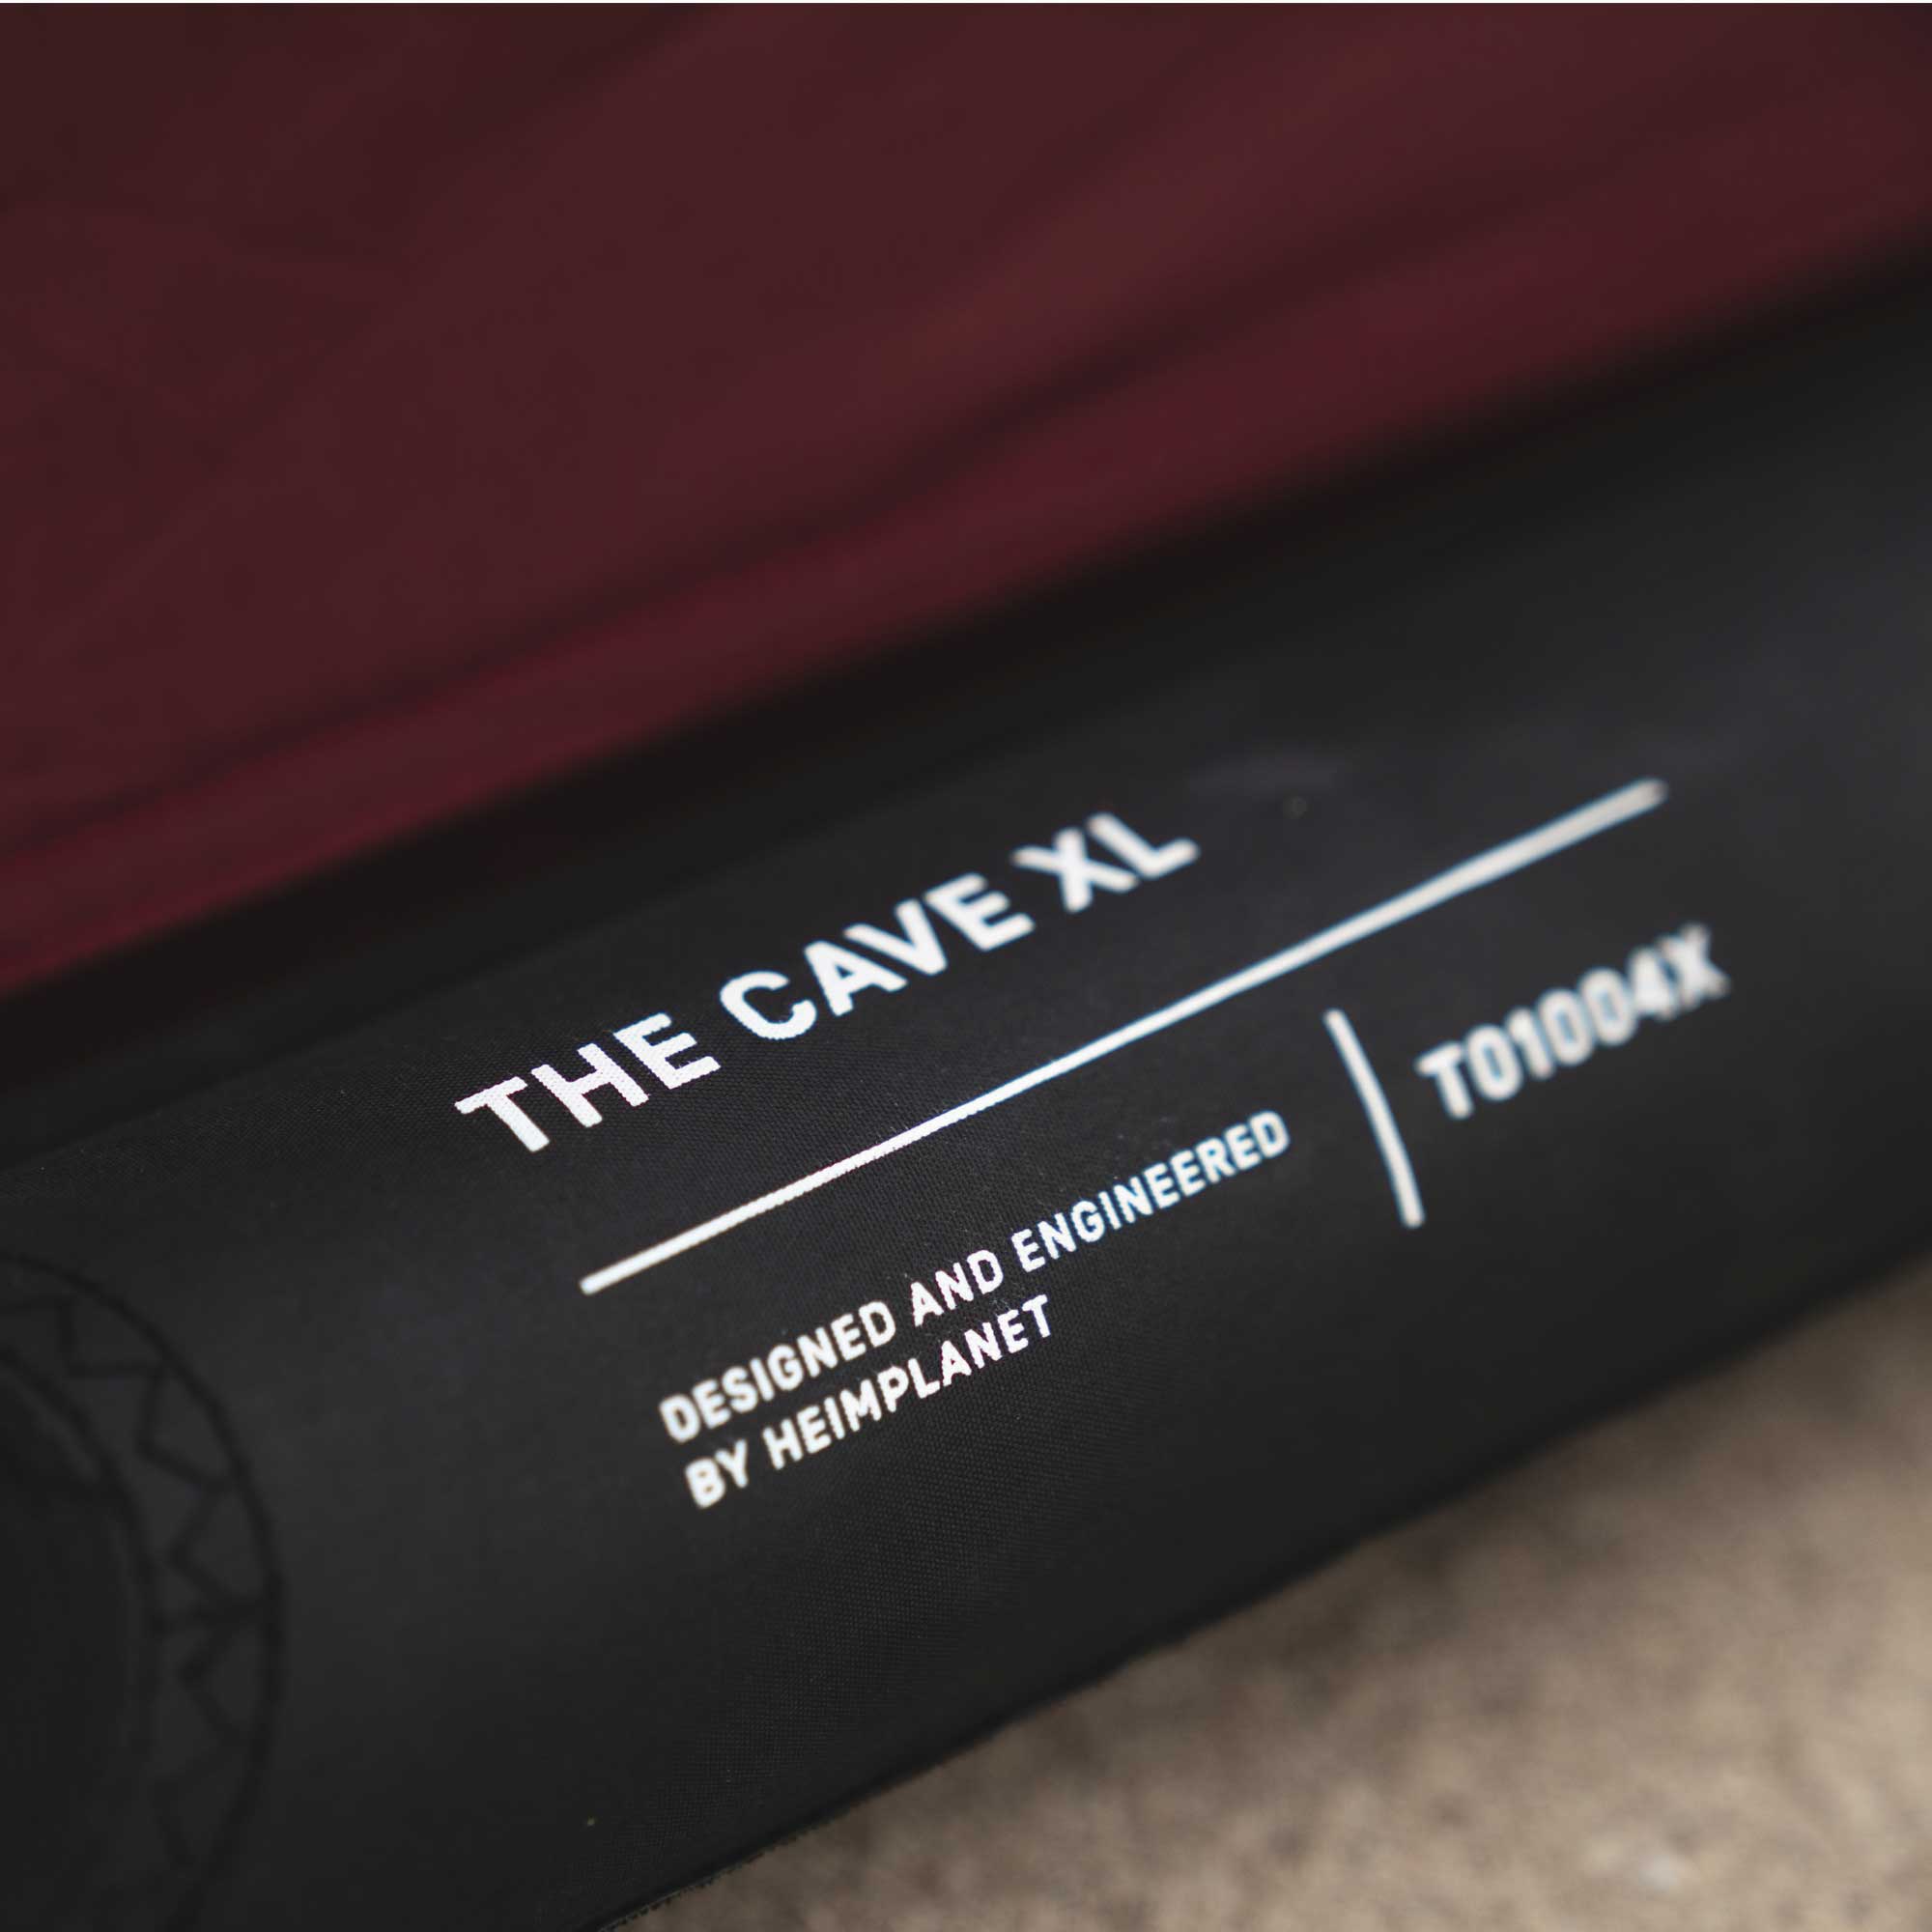 THE CAVE XL, 4-SEASON